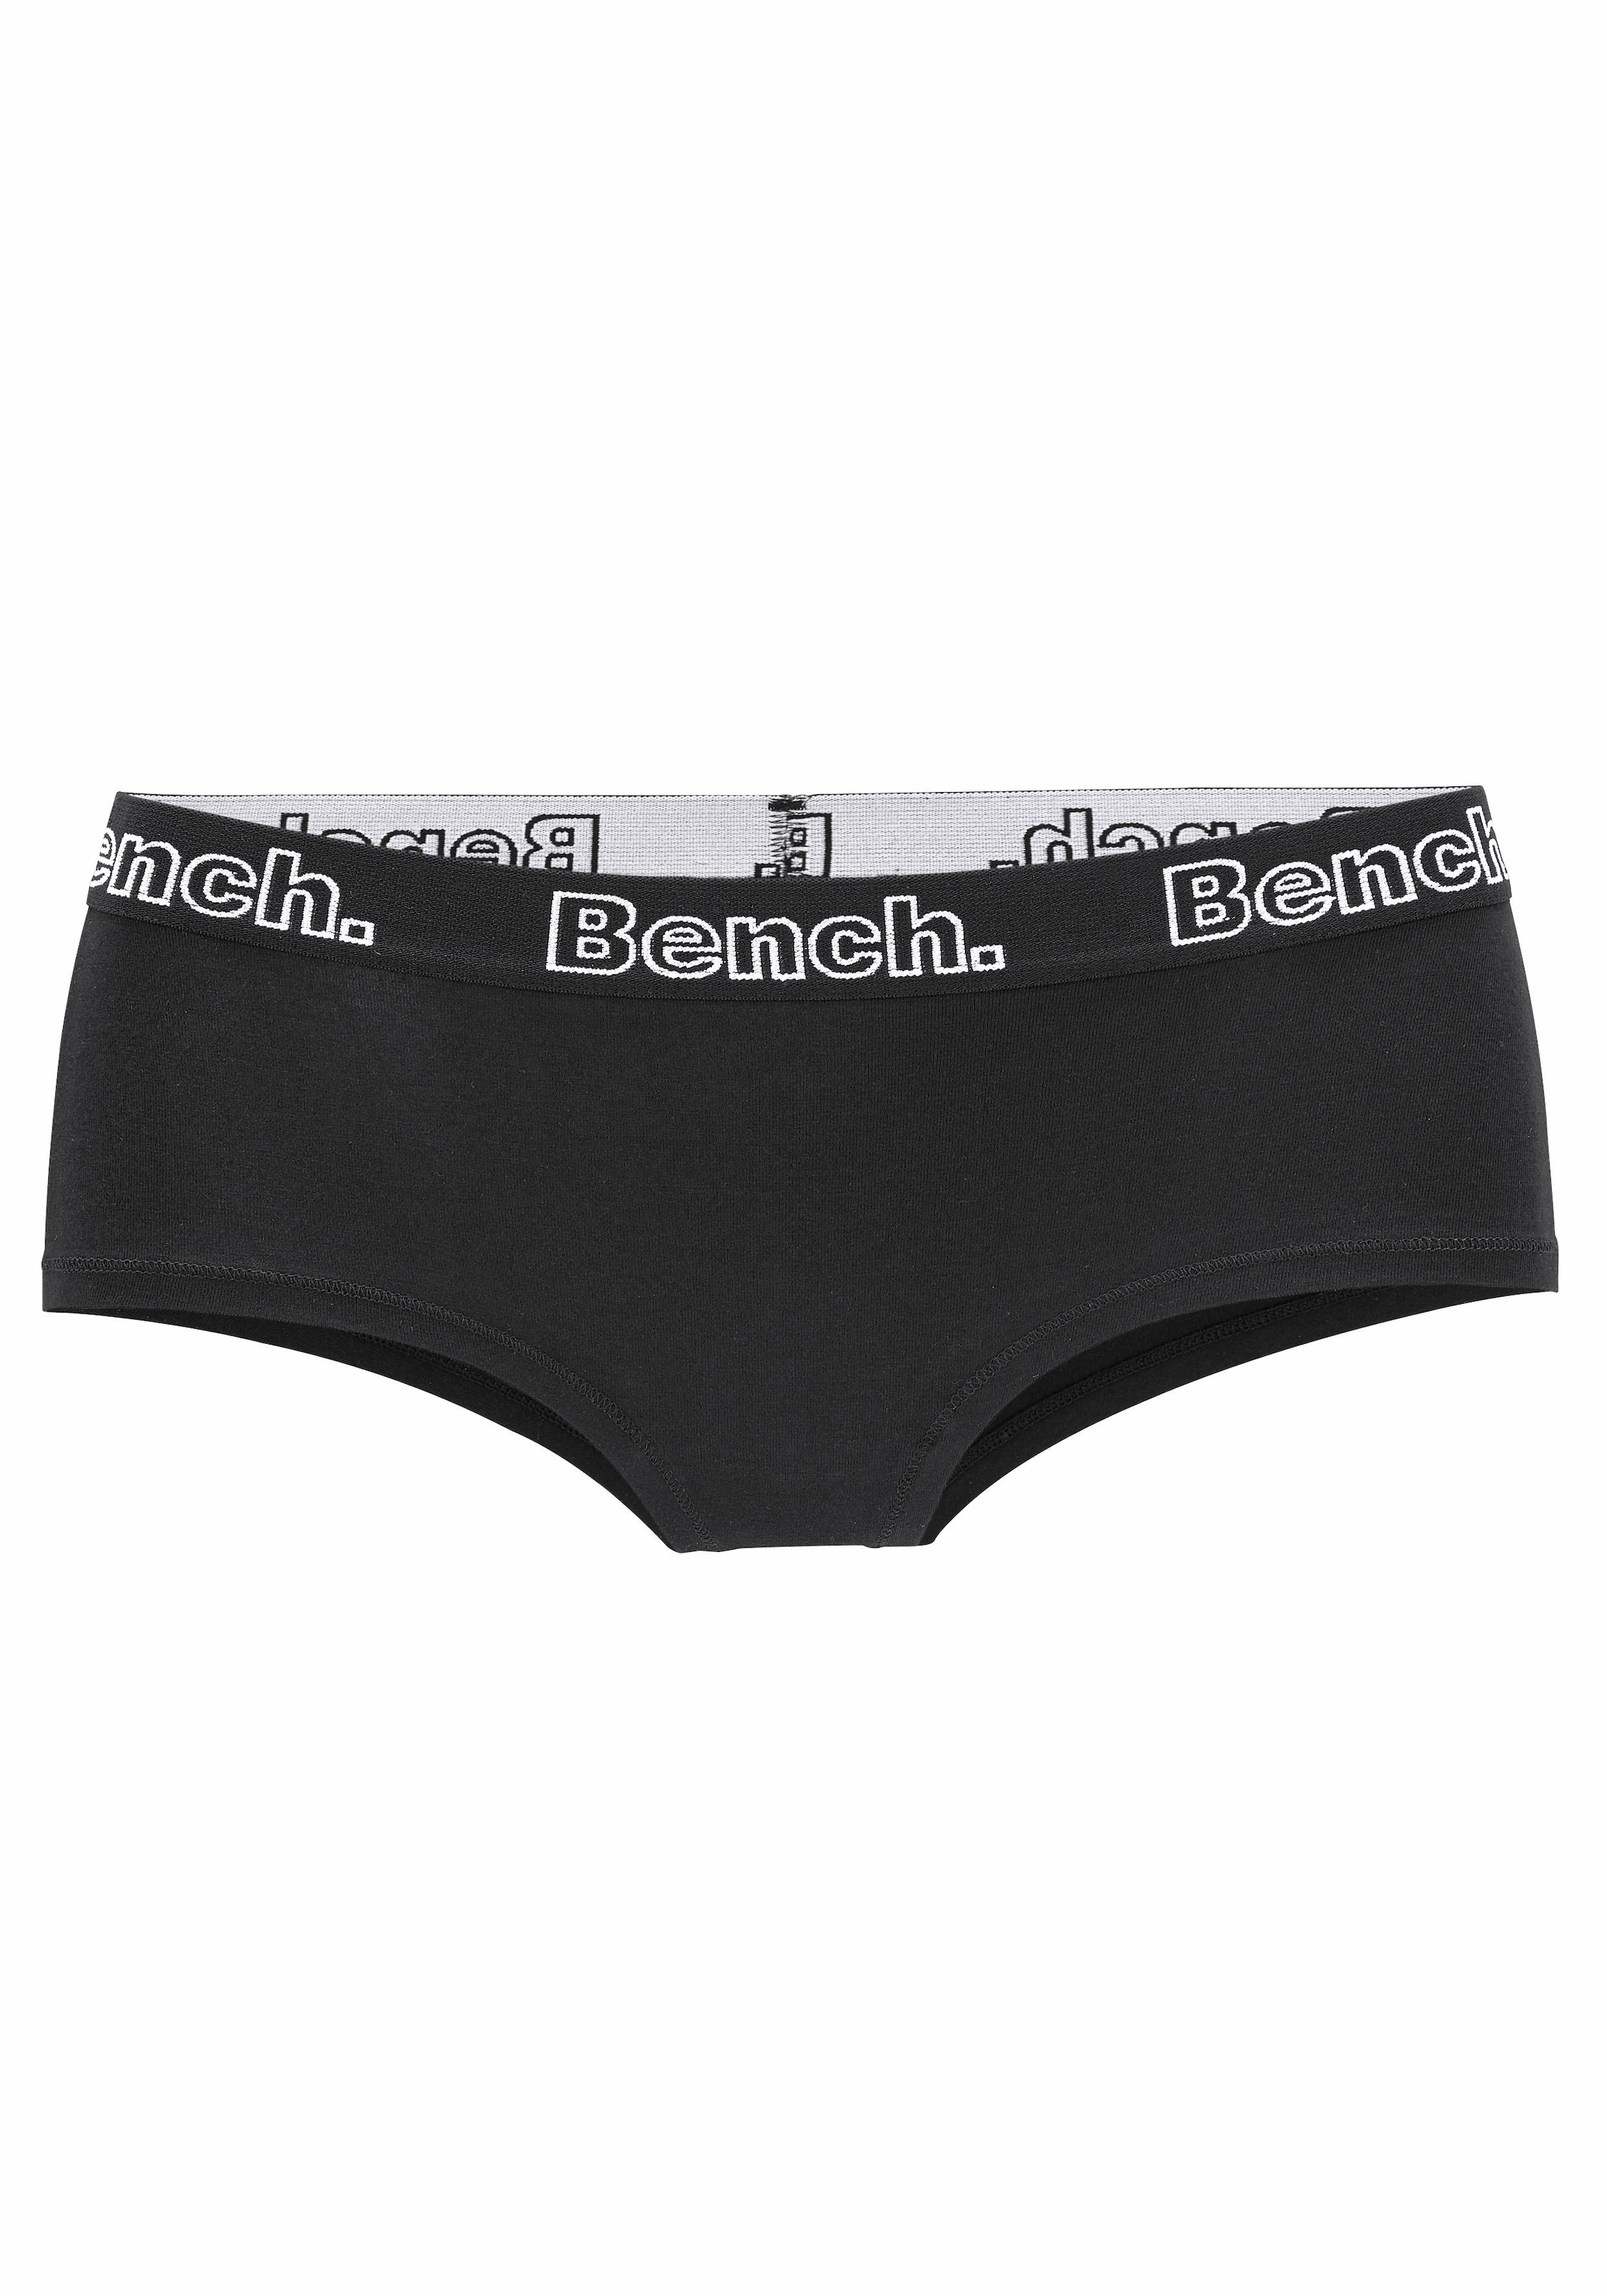 Bench. (Packung, Acheter schwarzem ligne Webbund en Logo Panty, 3 ✌ mit St.),